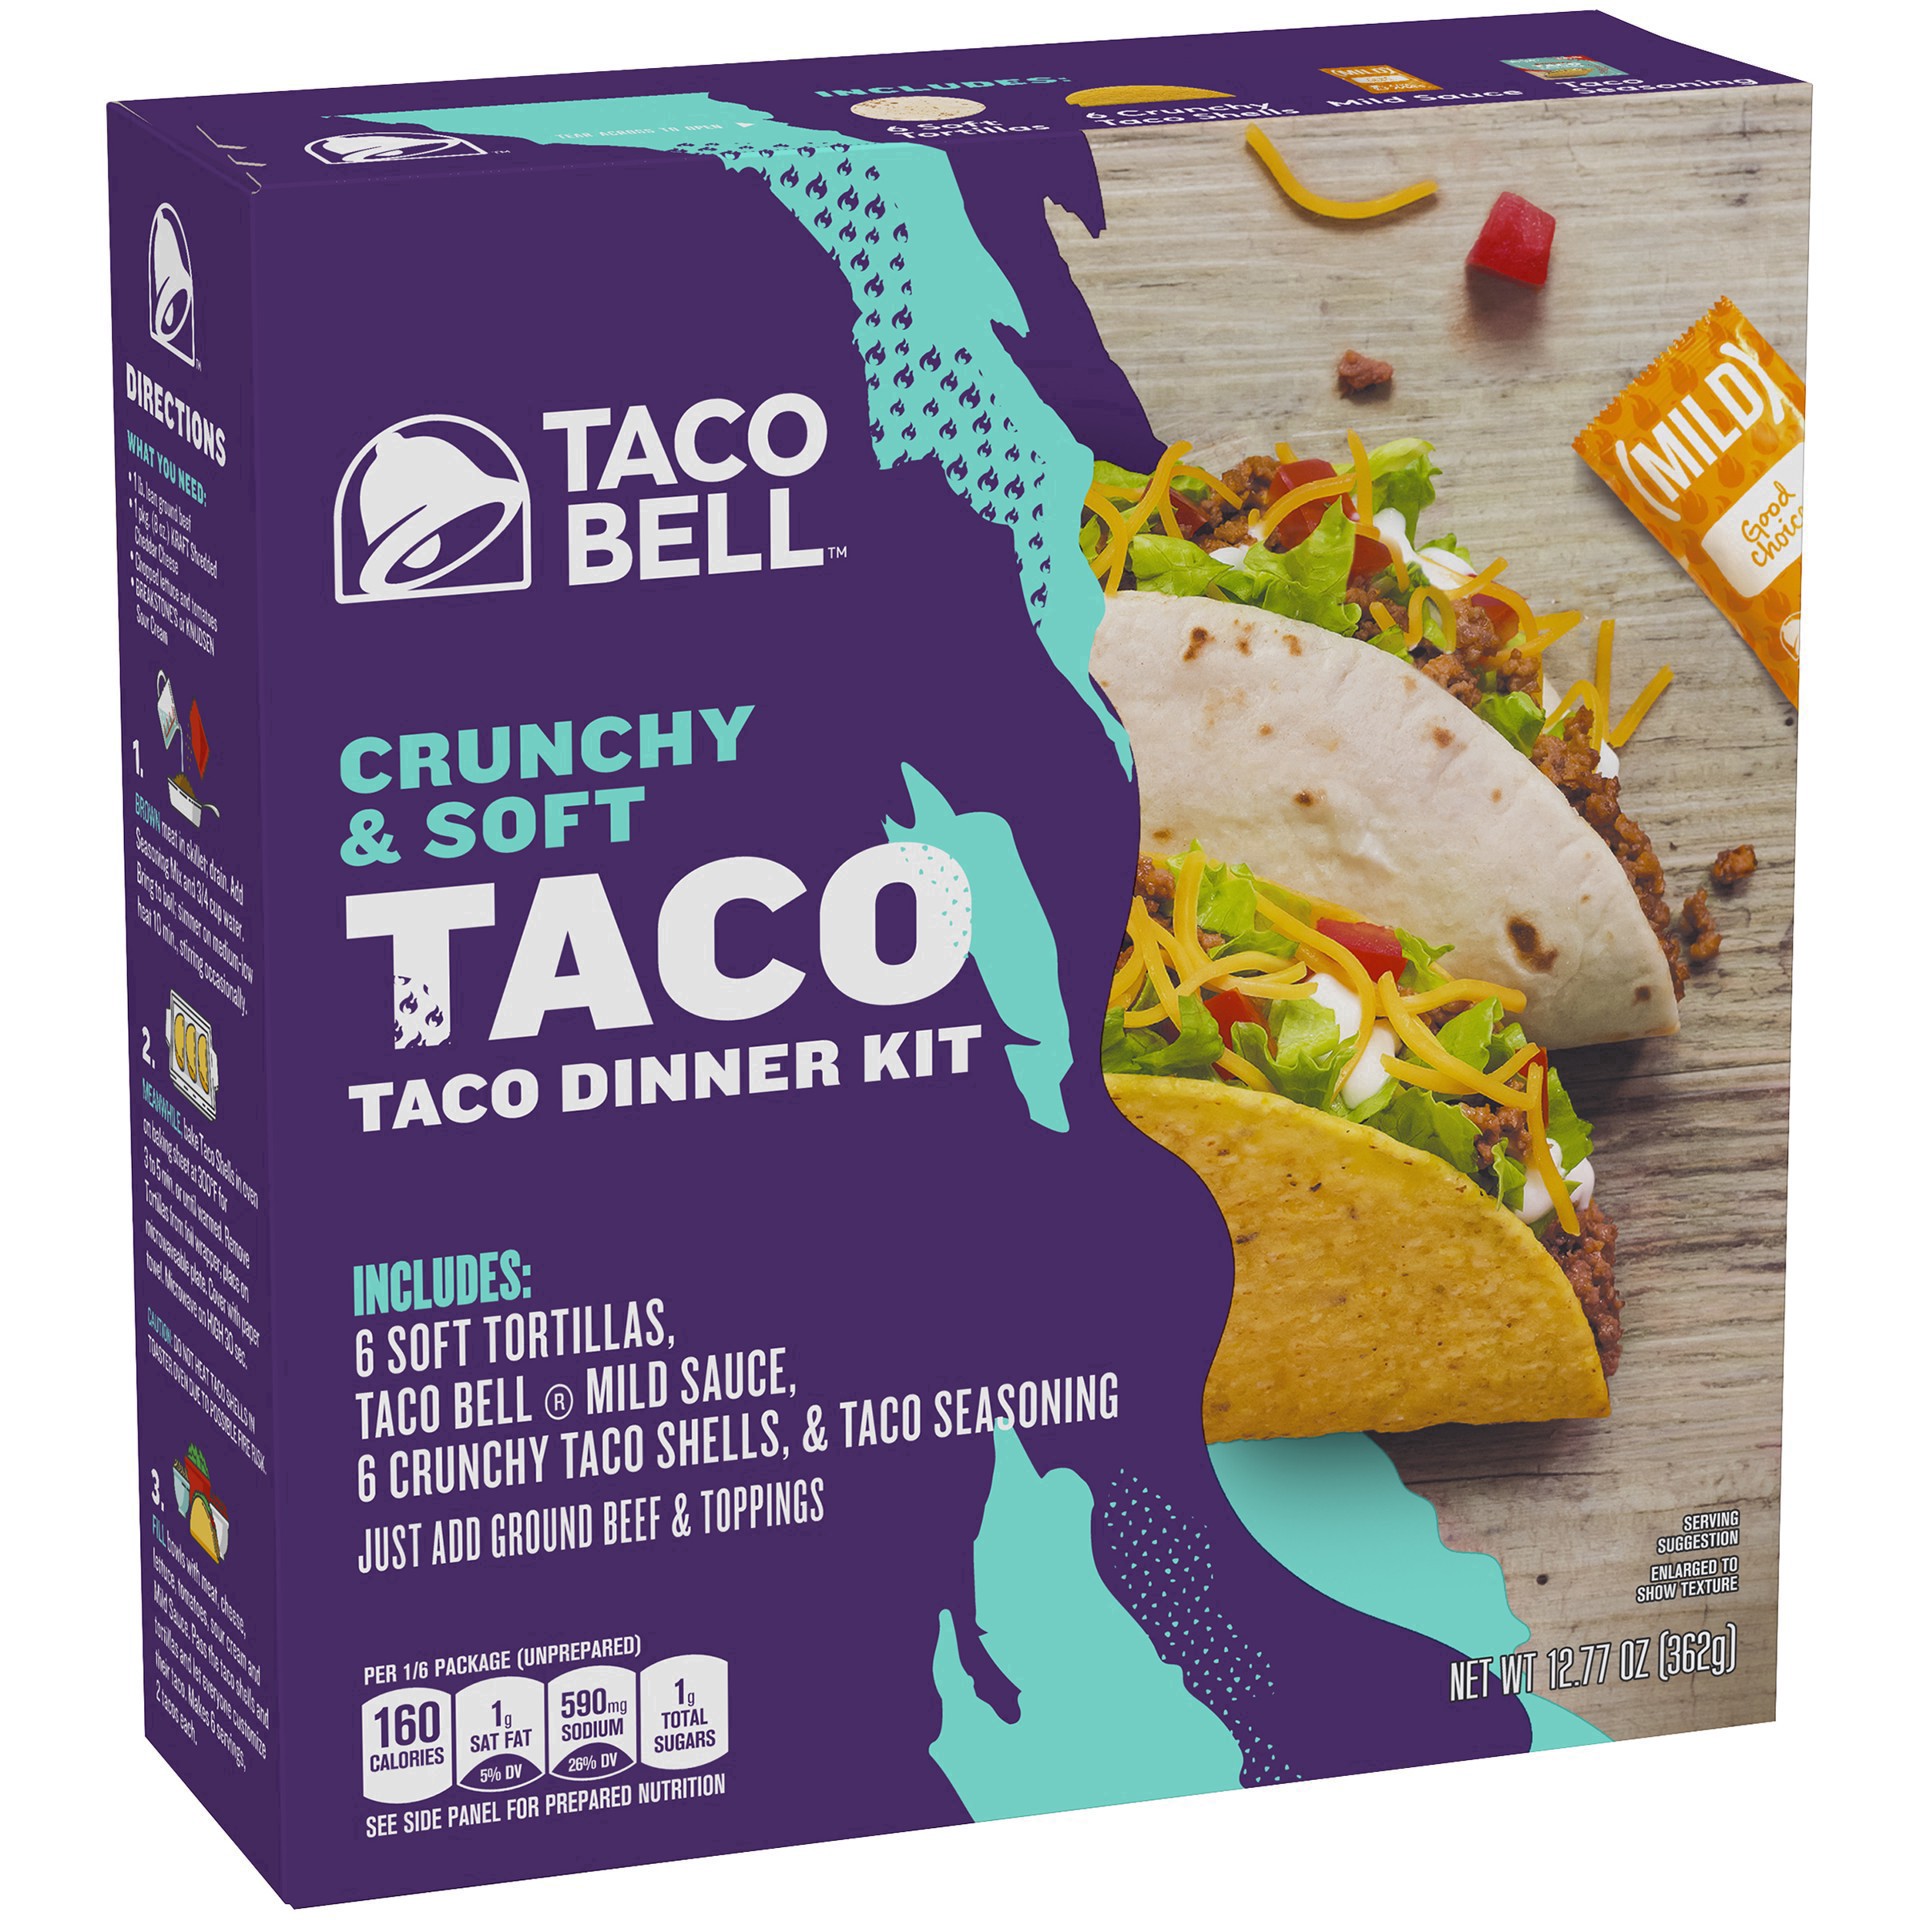 slide 21 of 101, Taco Bell Crunchy & Soft Taco Cravings Kit with 6 Soft Tortillas, 6 Crunchy Taco Shells, Taco Bell Mild Sauce & Seasoning, 12.77 oz Box, 1 ct